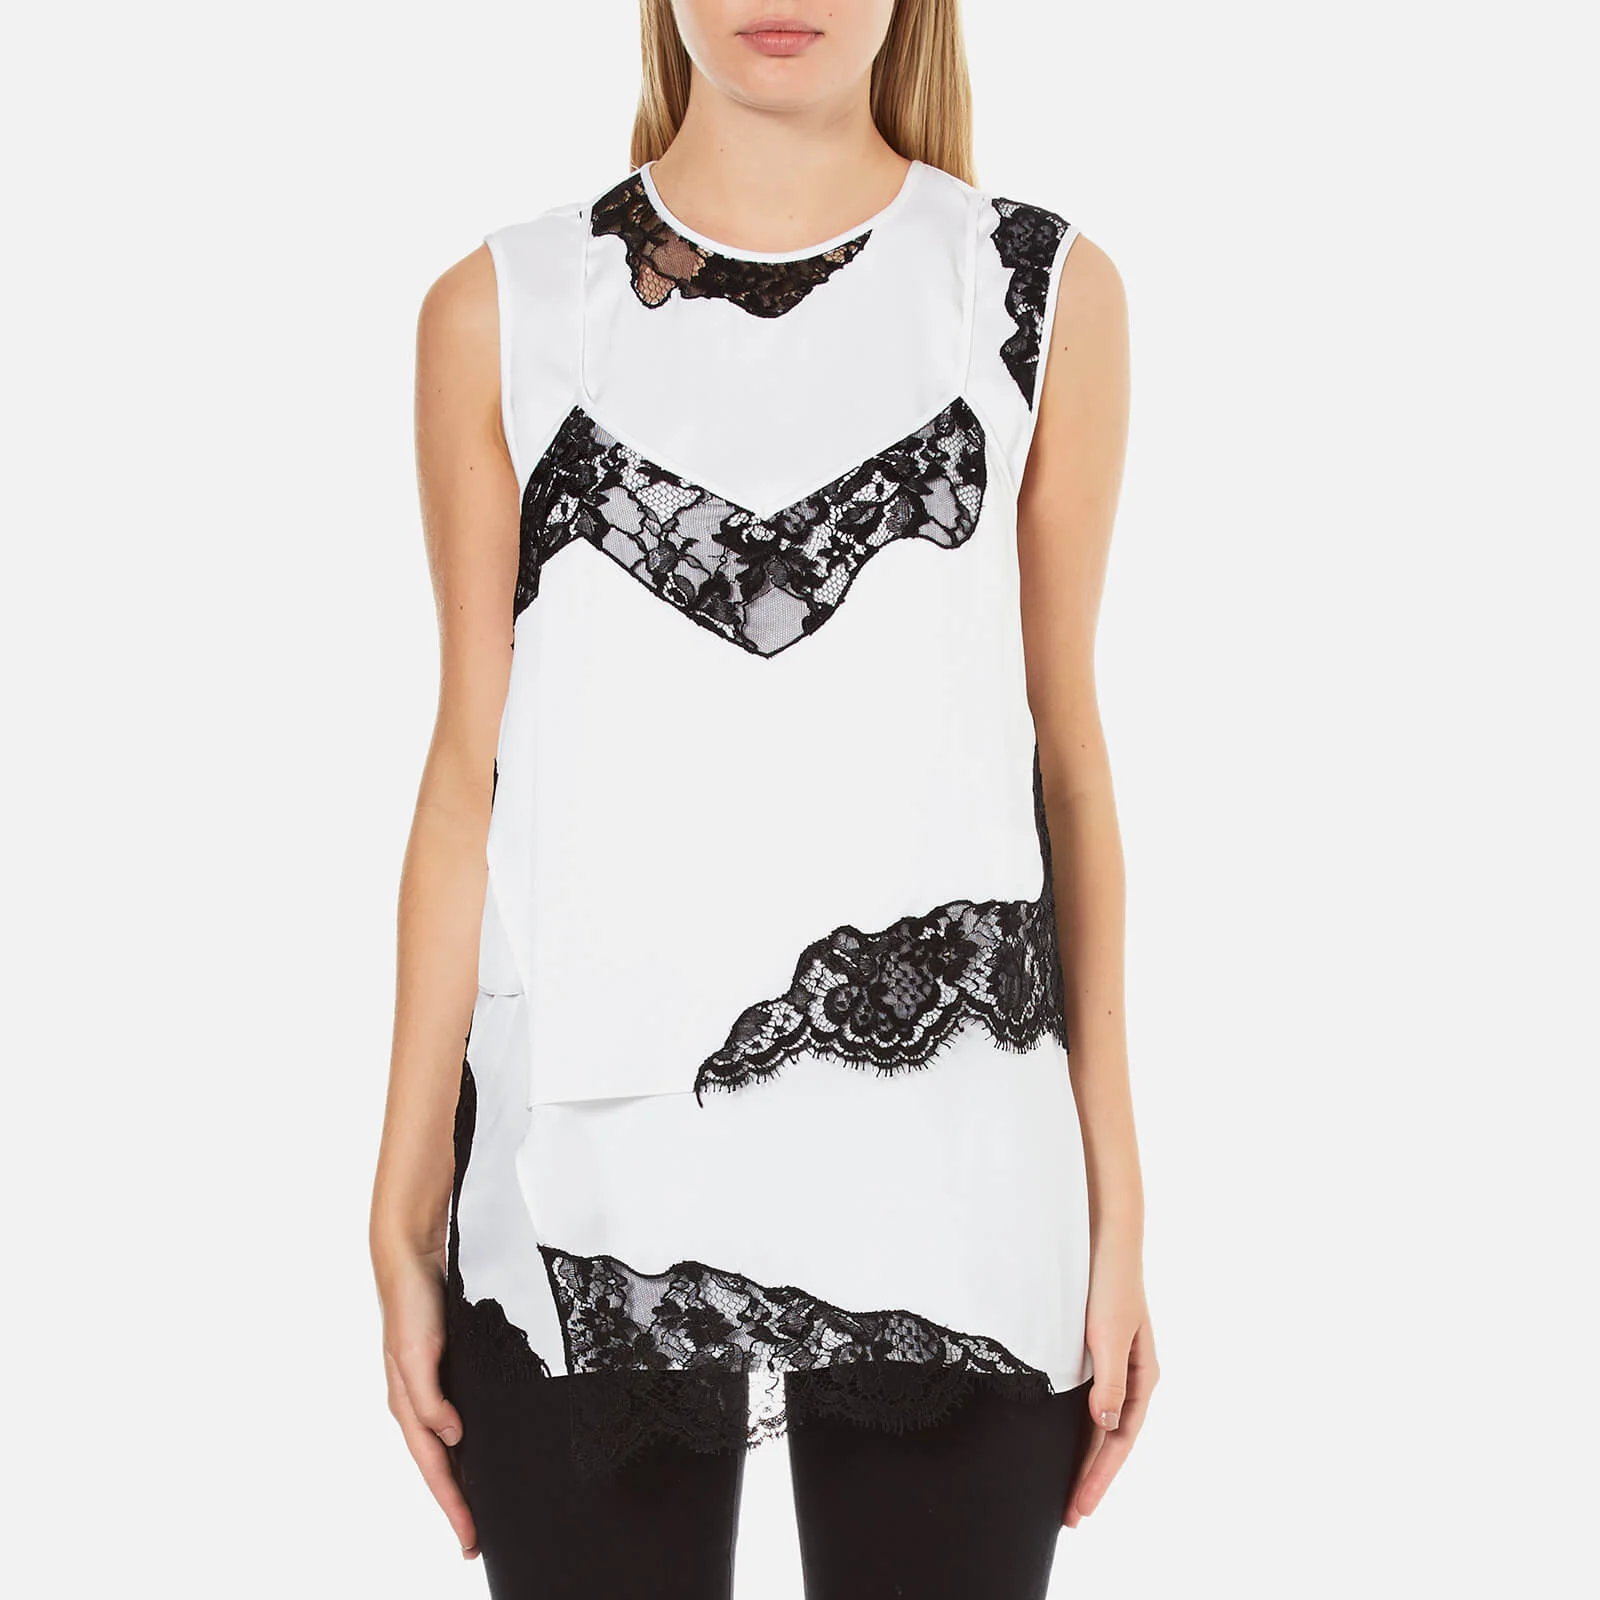 DKNY Women's Sleeveless Layered Shirt with Lace Trims - Chalk Image 1